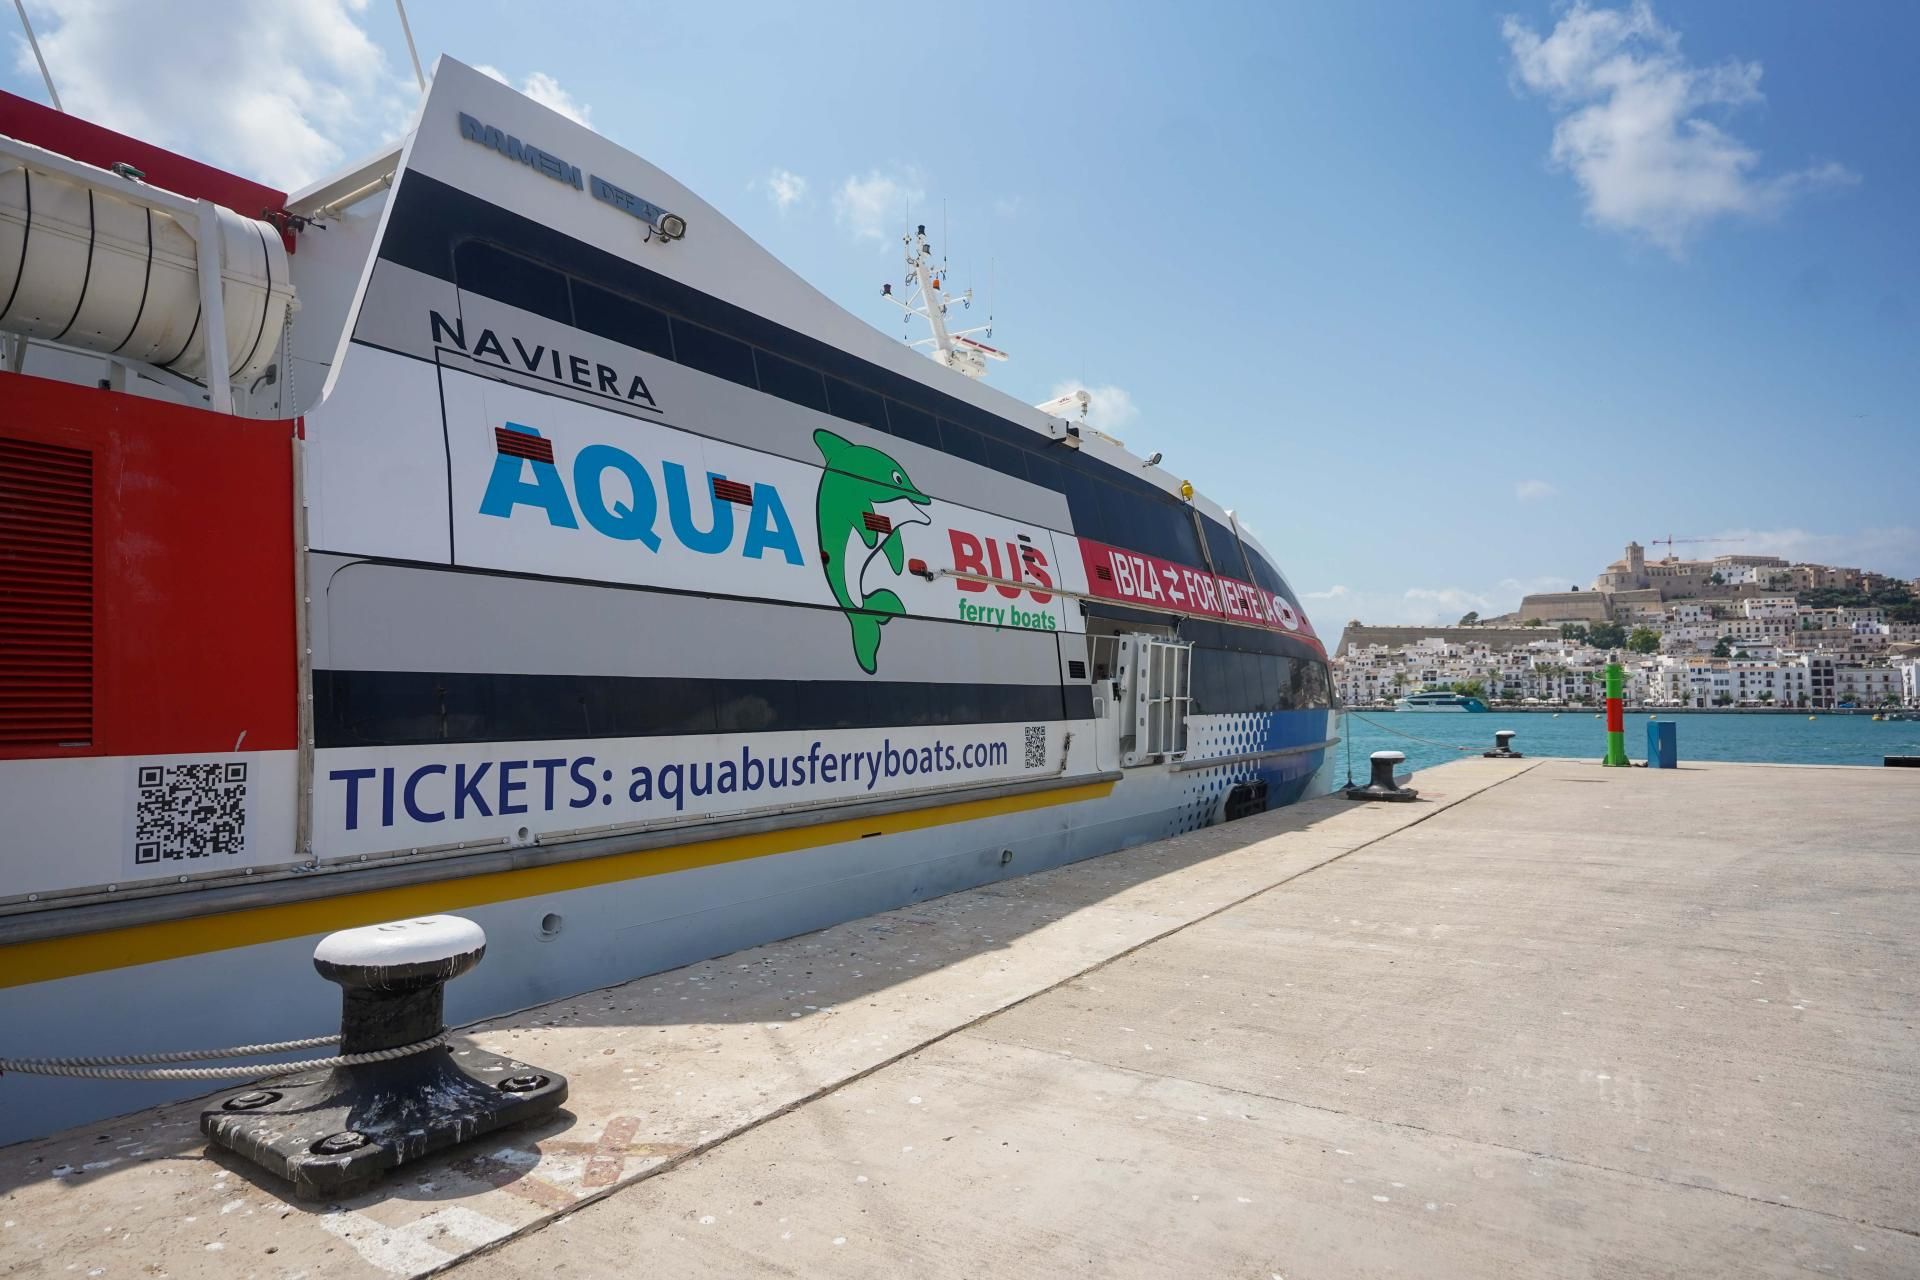 Aquabus Jet rivoluziona la sua flotta con due nuove navi all'avanguardia